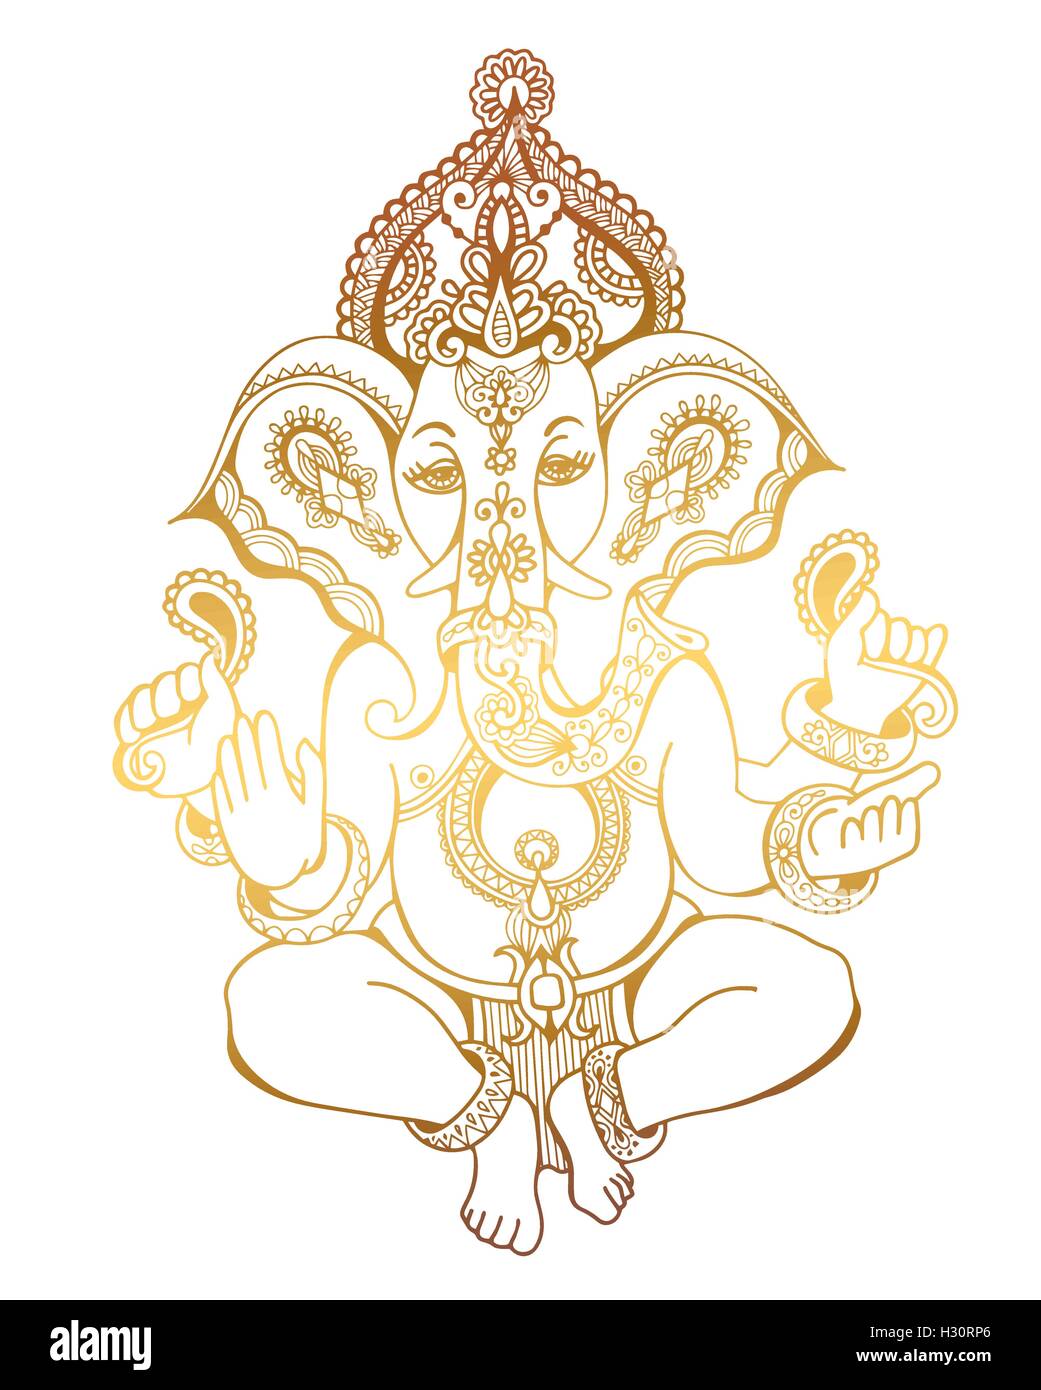 20+ Lord Ganesha Tattoo Ideas with Images | Ganesha tattoo, Shiva tattoo  design, Tattoos